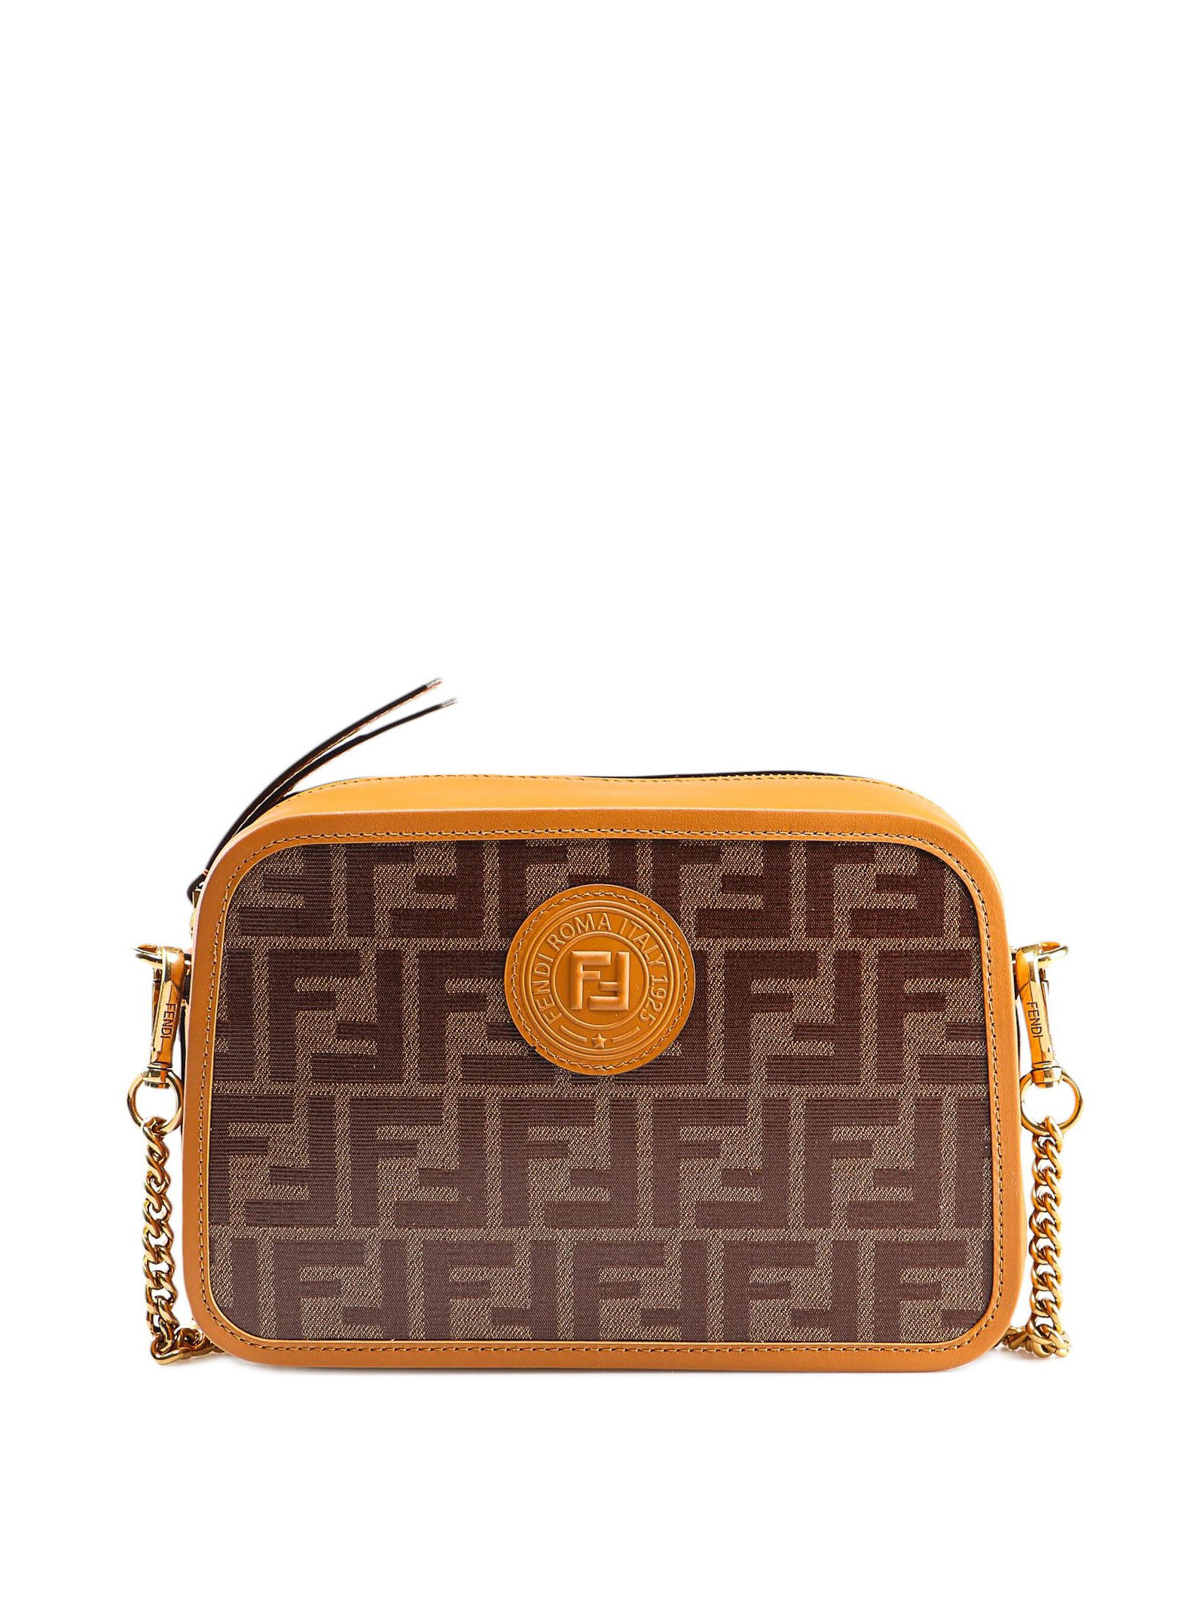 ff purse